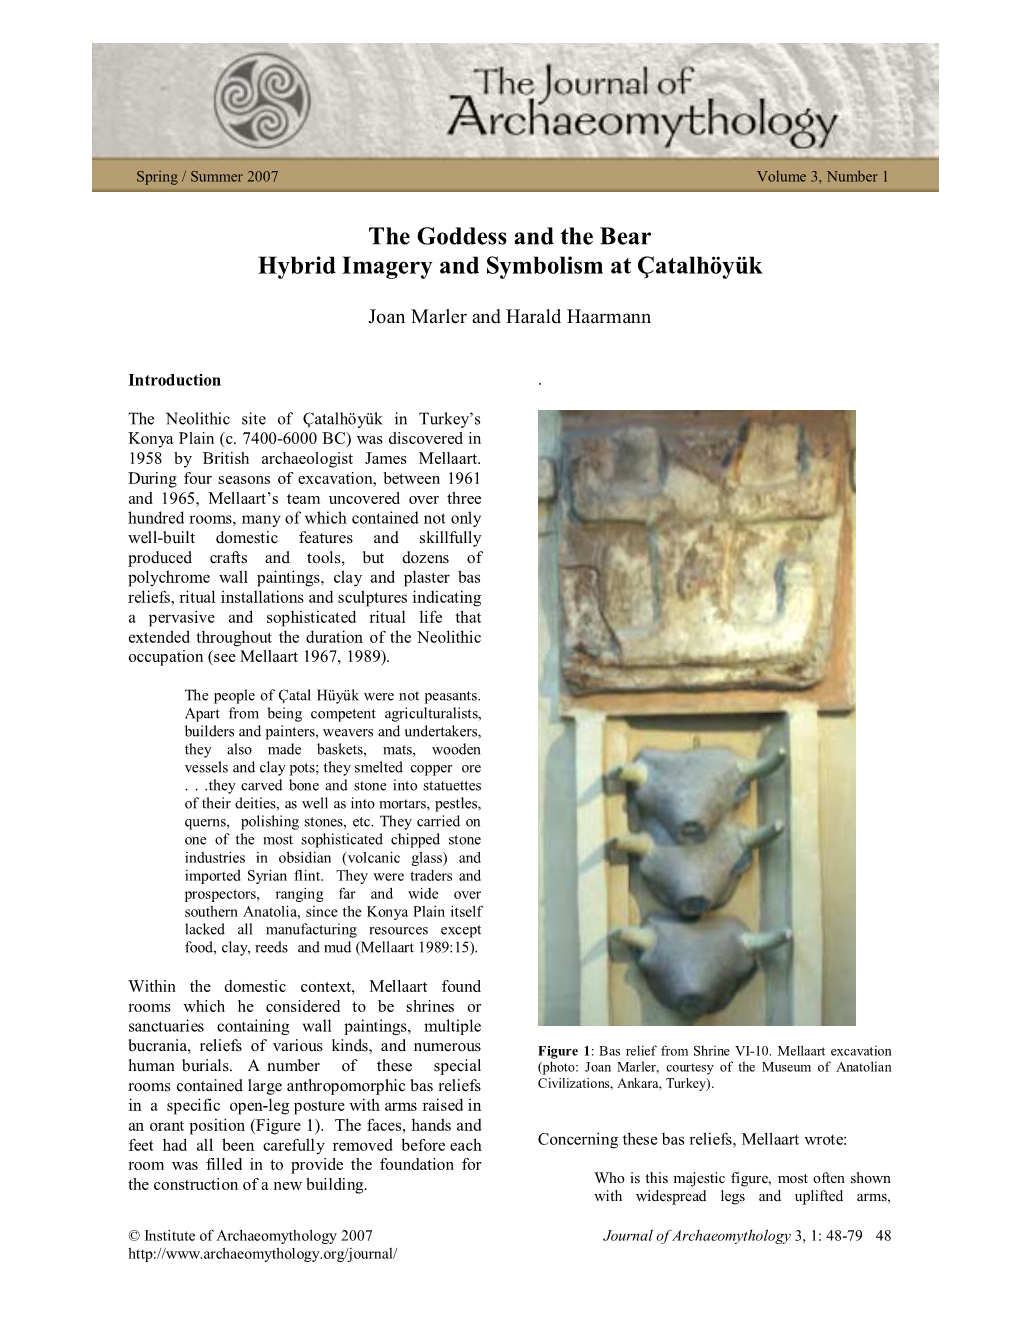 Hybrid Imagery and Symbolism at Çatalhöyük